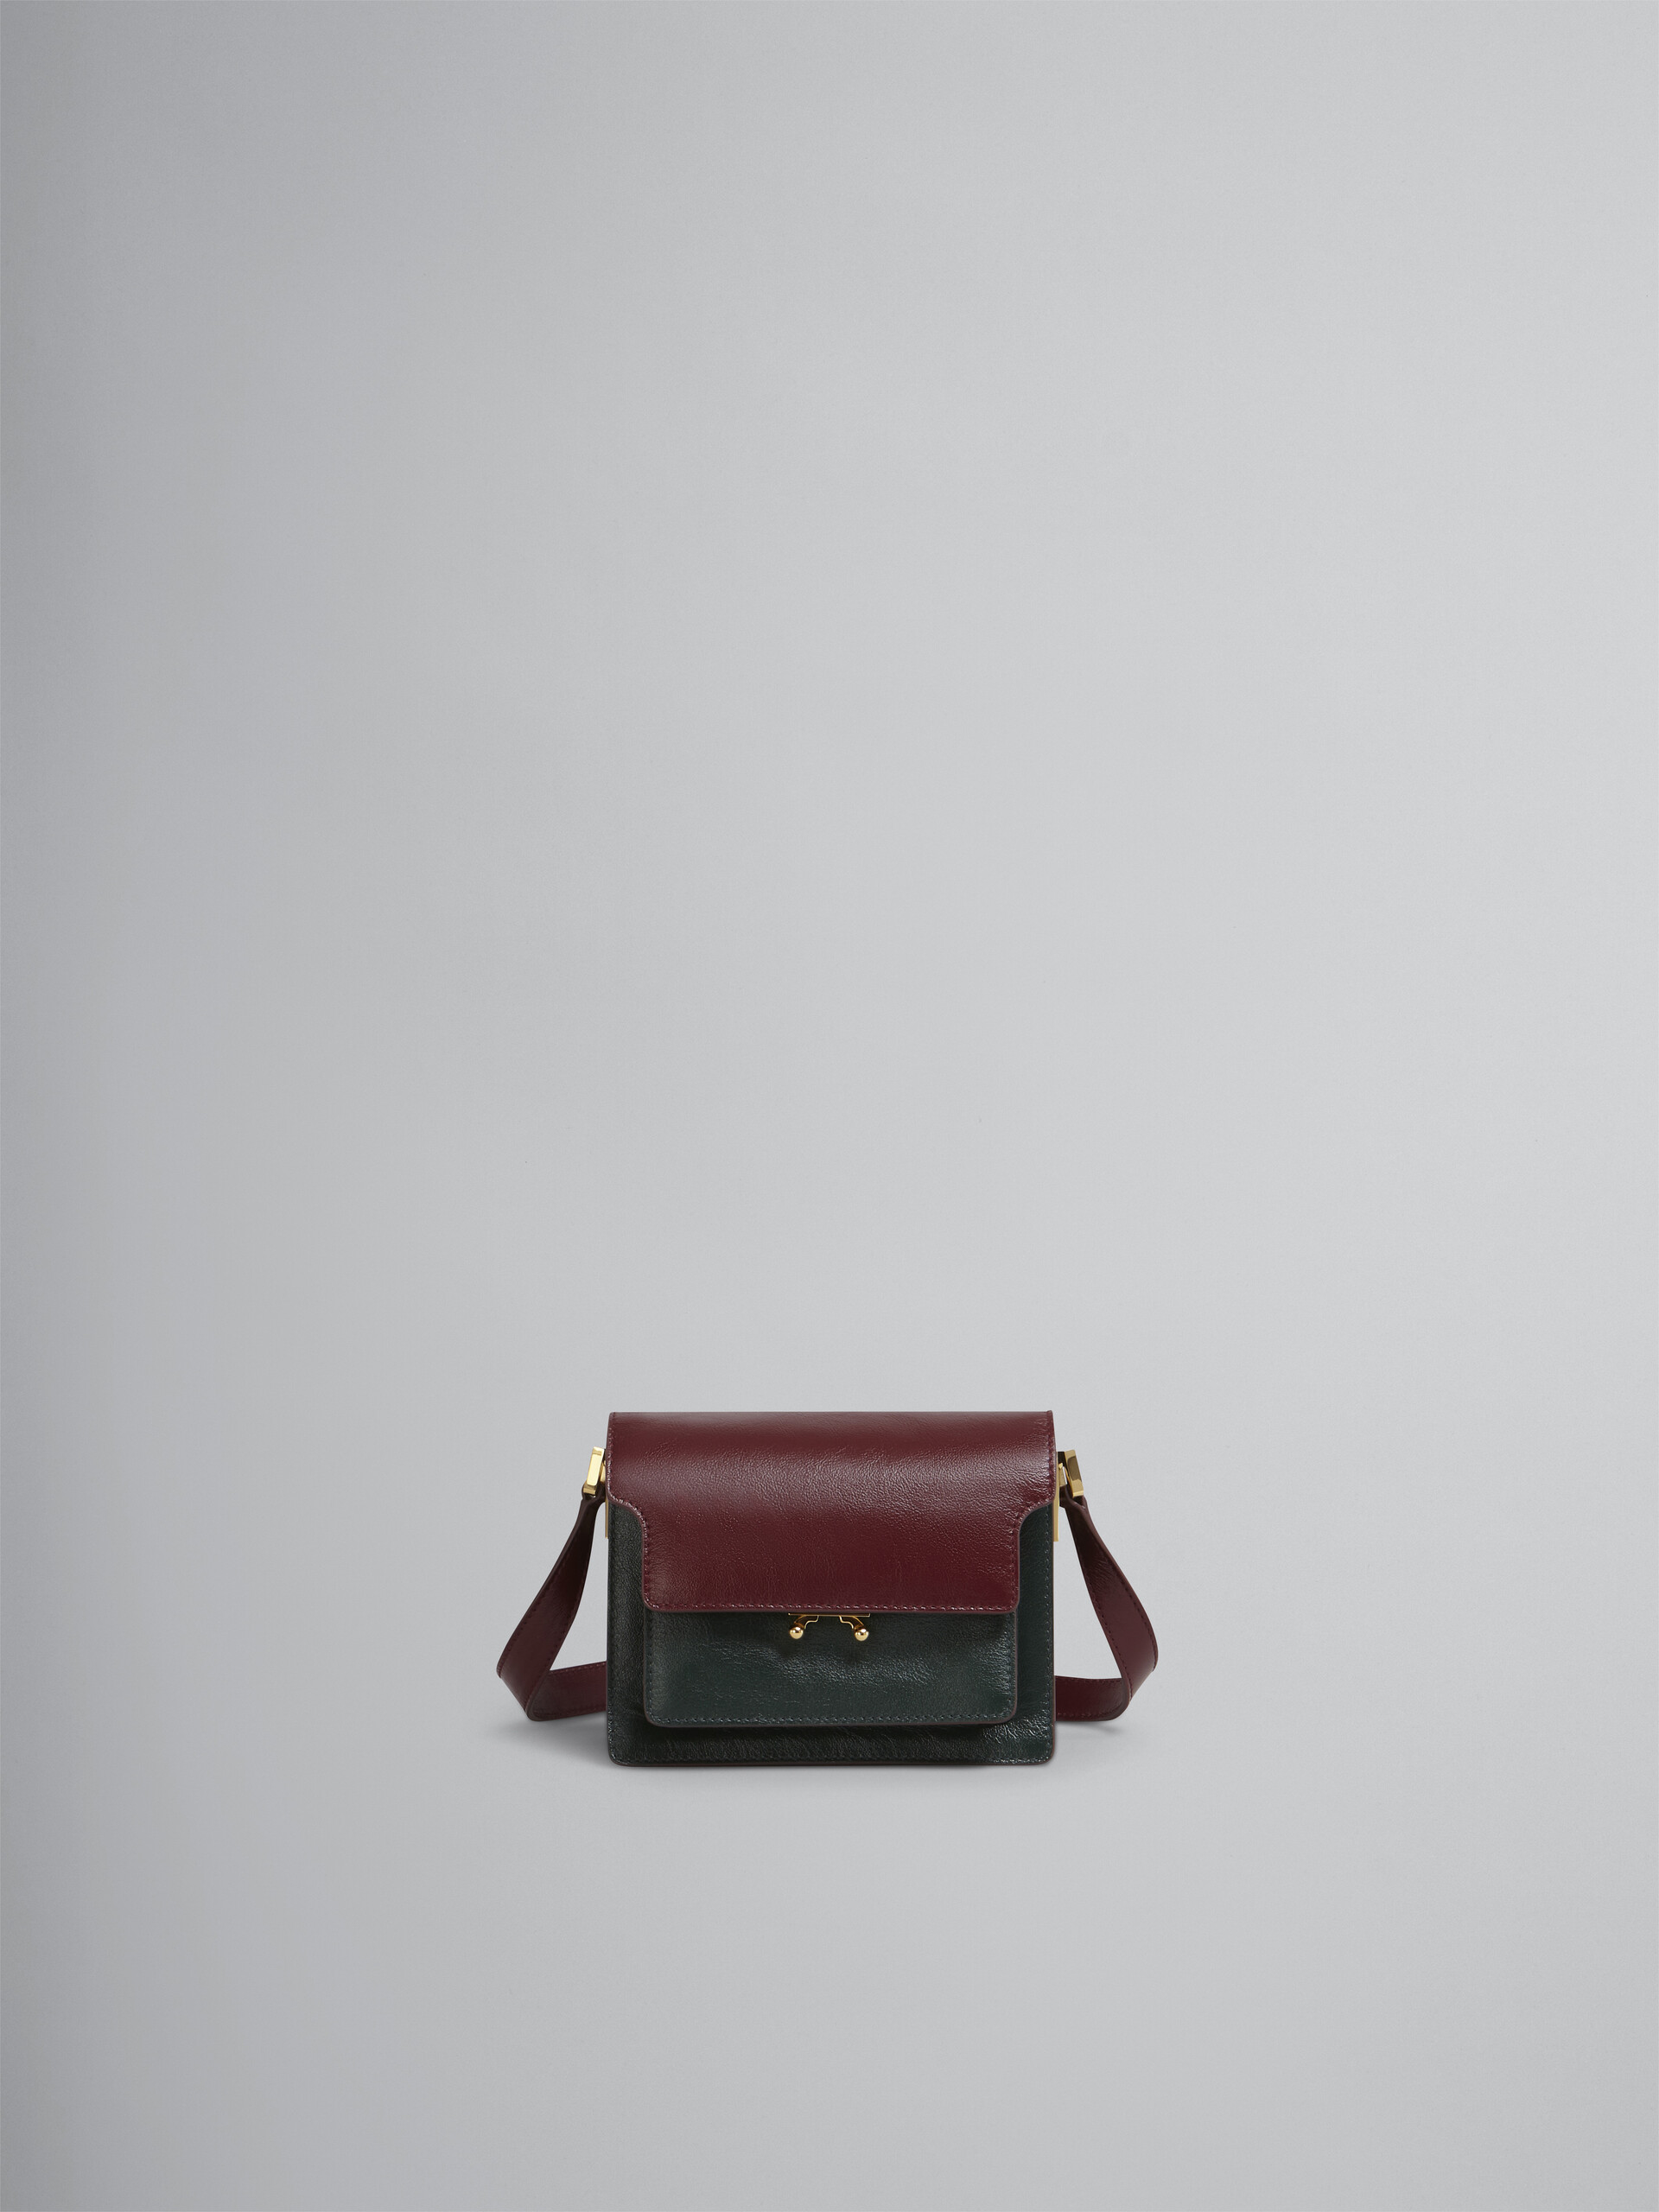 TRUNK SOFT bag mini in pelle verde e bordeaux - Borse a spalla - Image 1